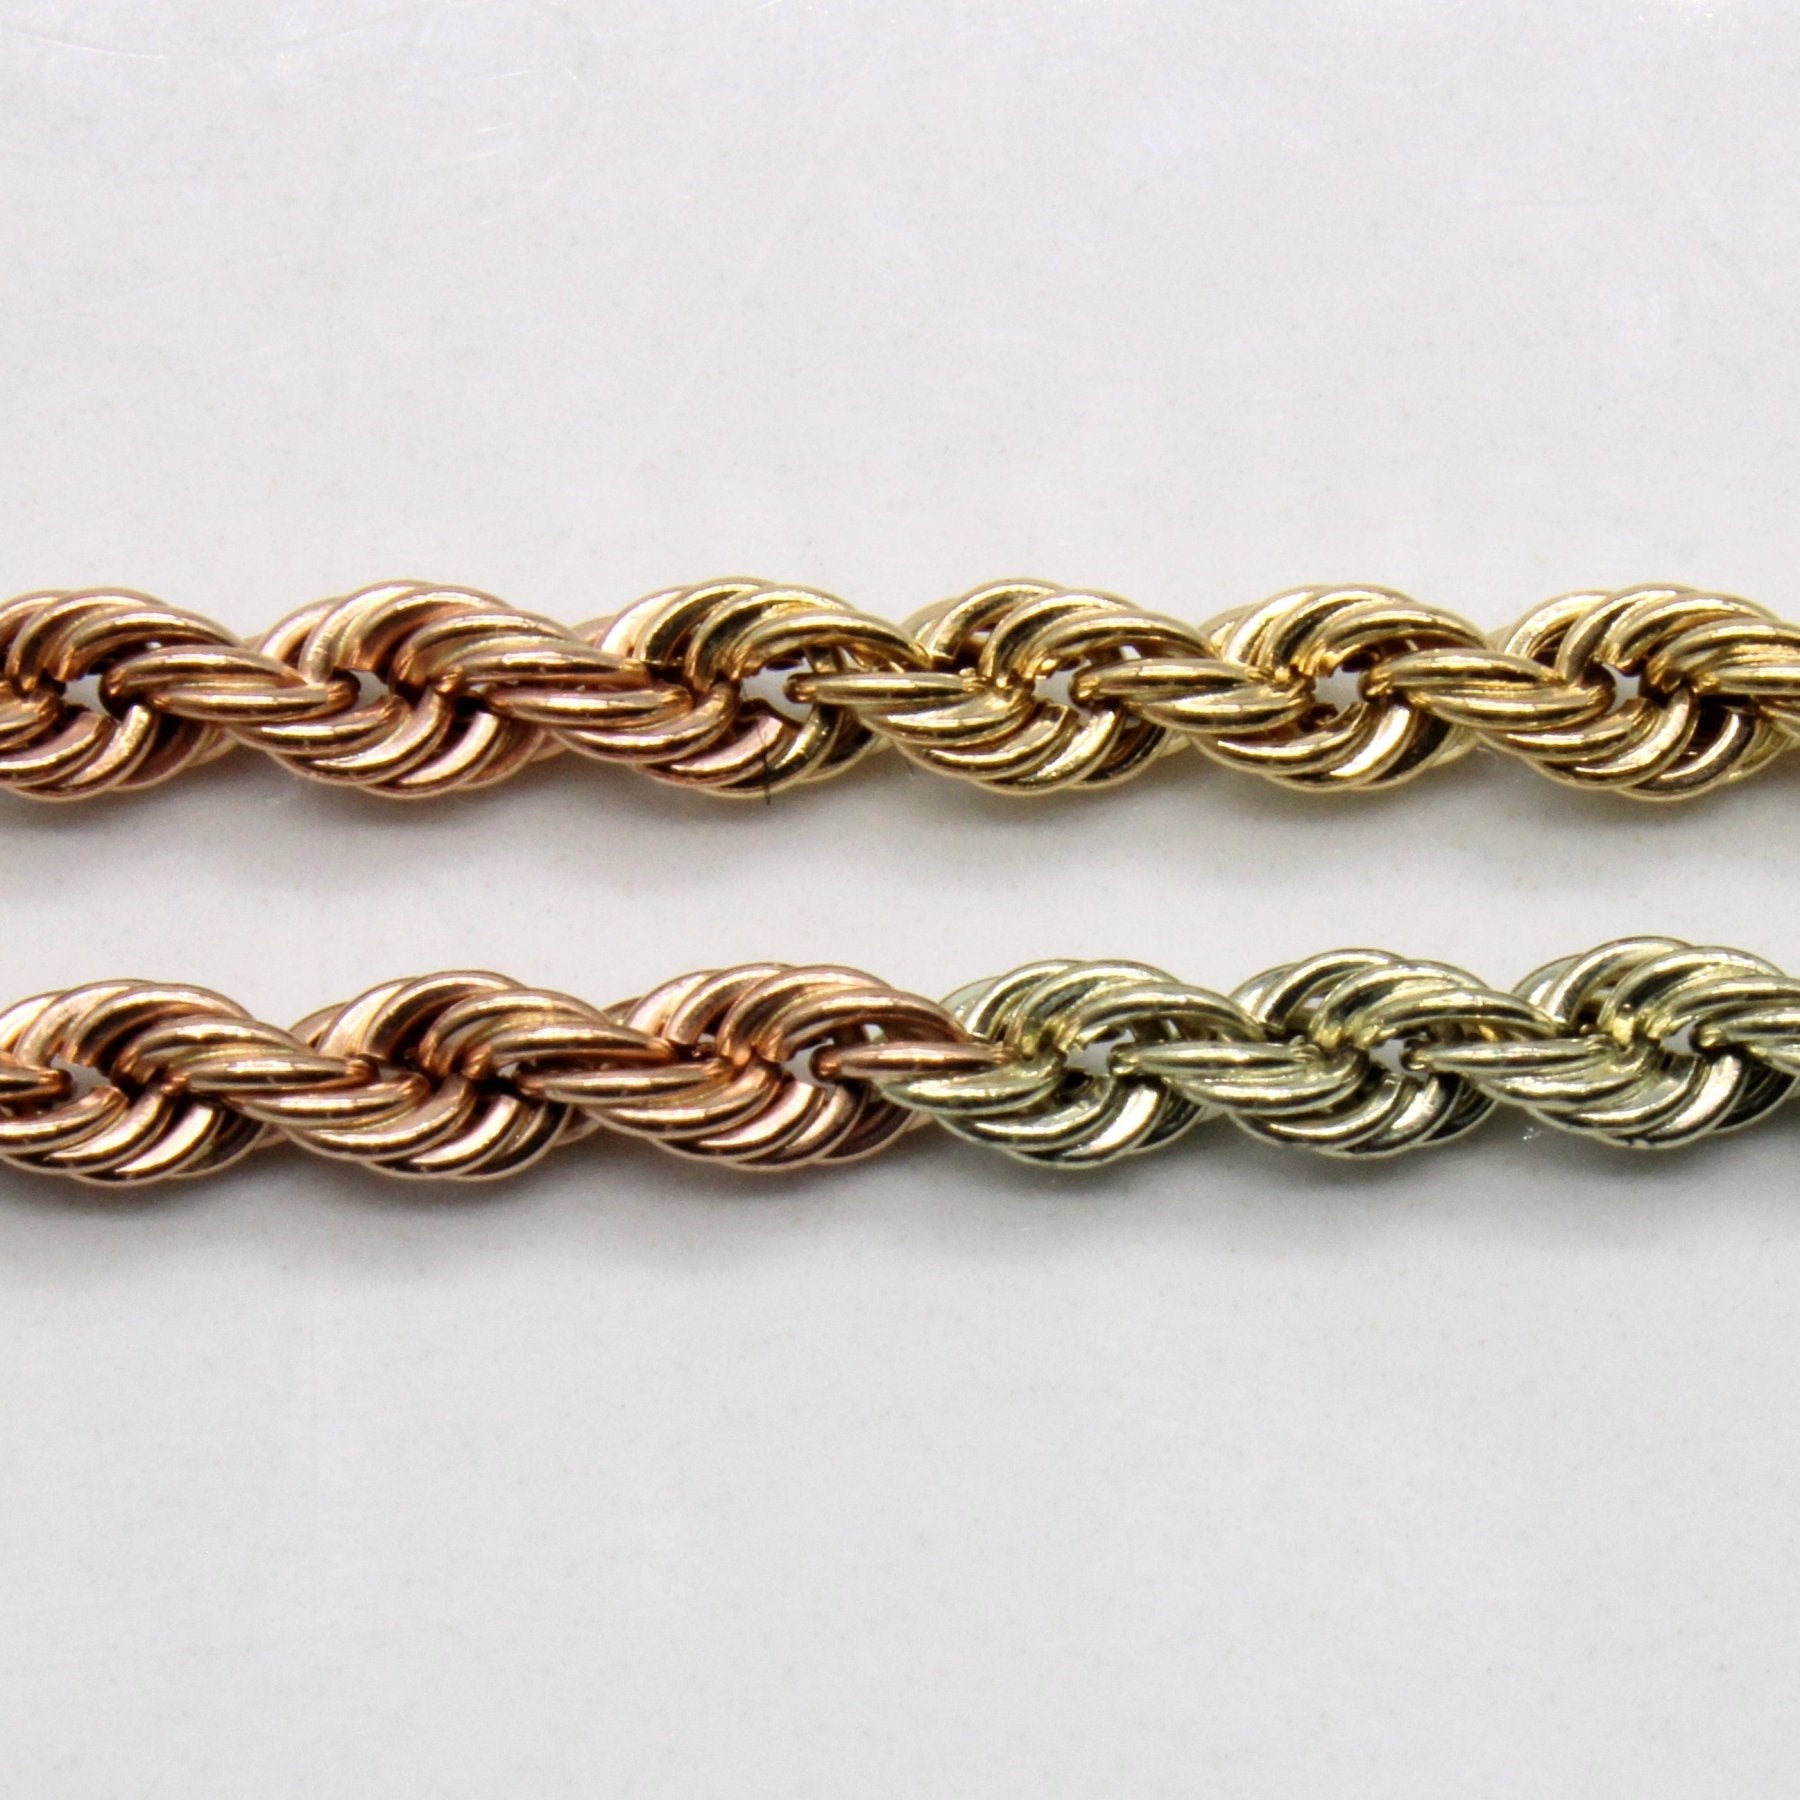 10k Tri Tone Gold Rope Chain | 24